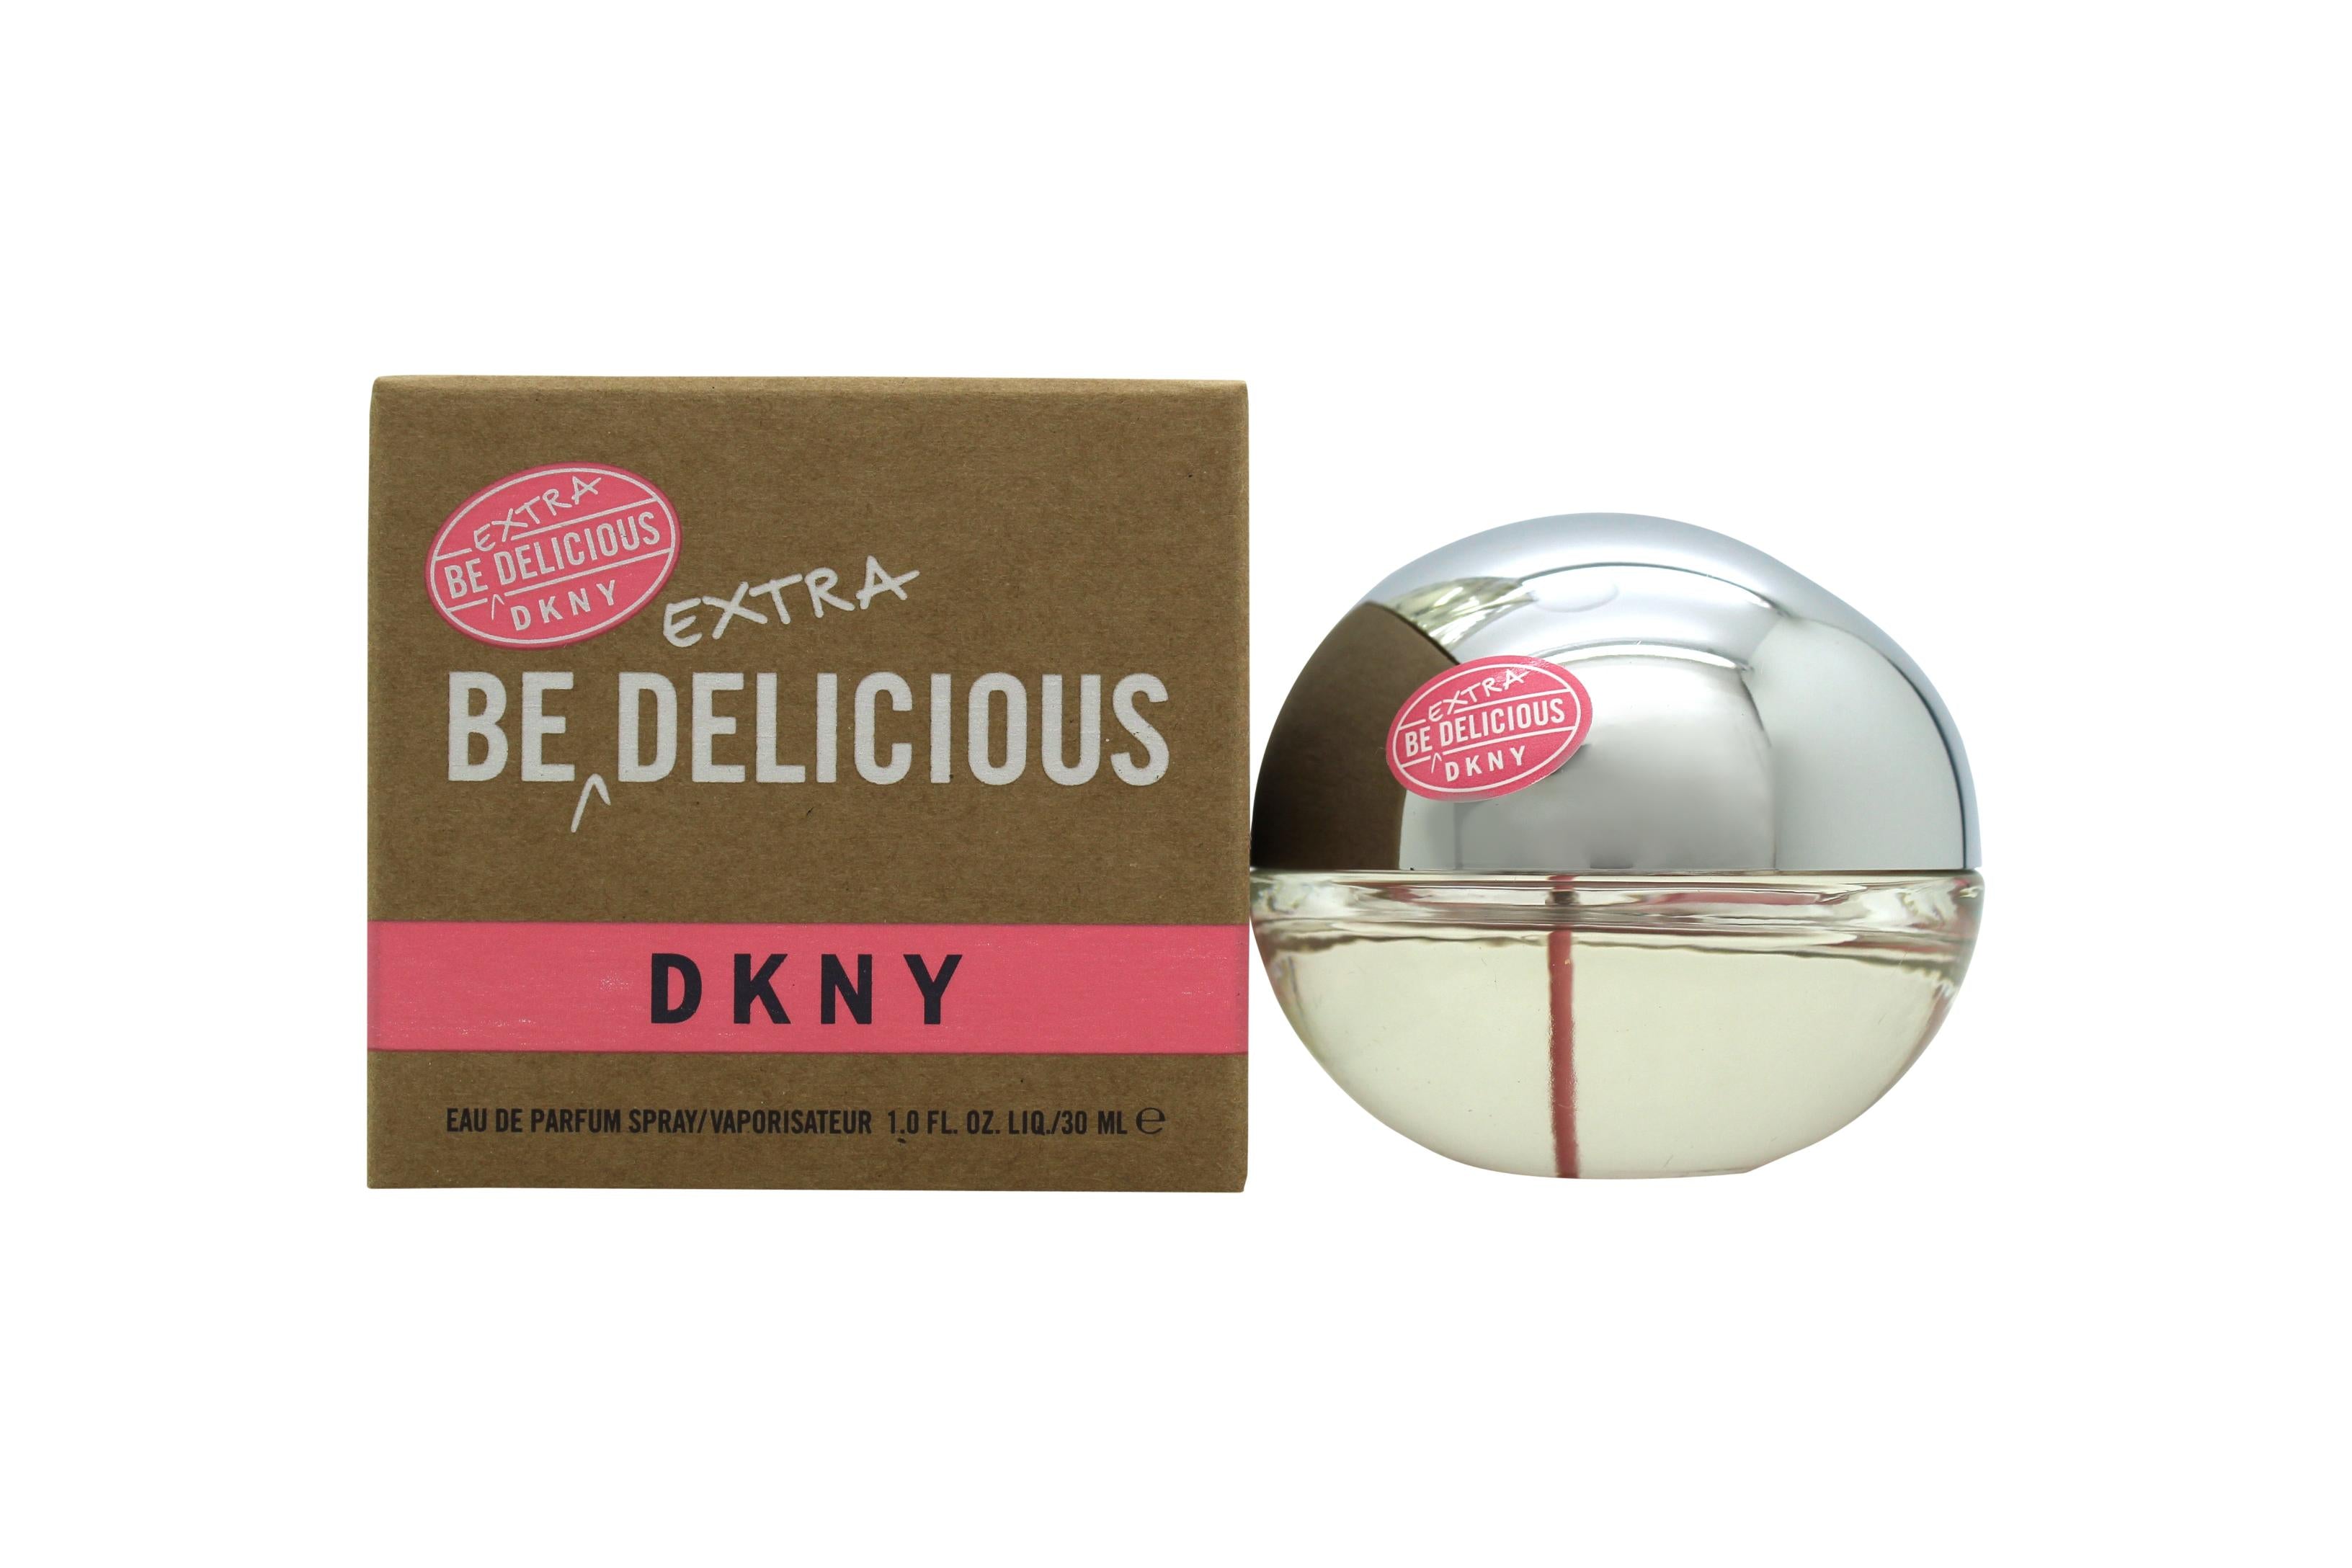 View DKNY Be Extra Delicious Eau de Parfum 30ml Spray information